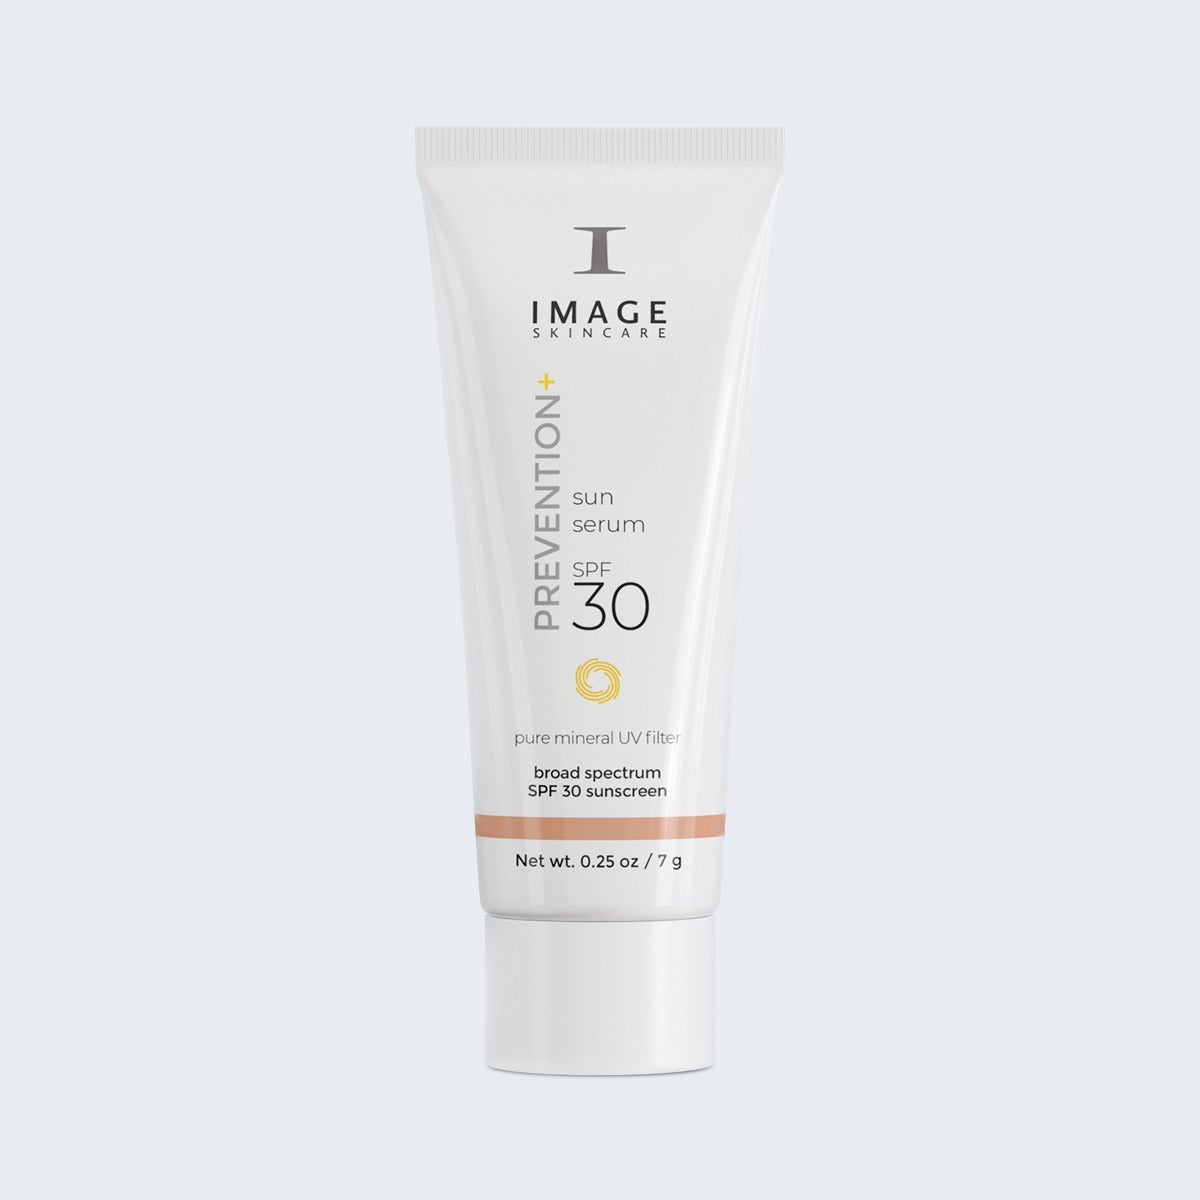 SAMPLE: IMAGE Skincare Prevention + Sun Serum Tinted